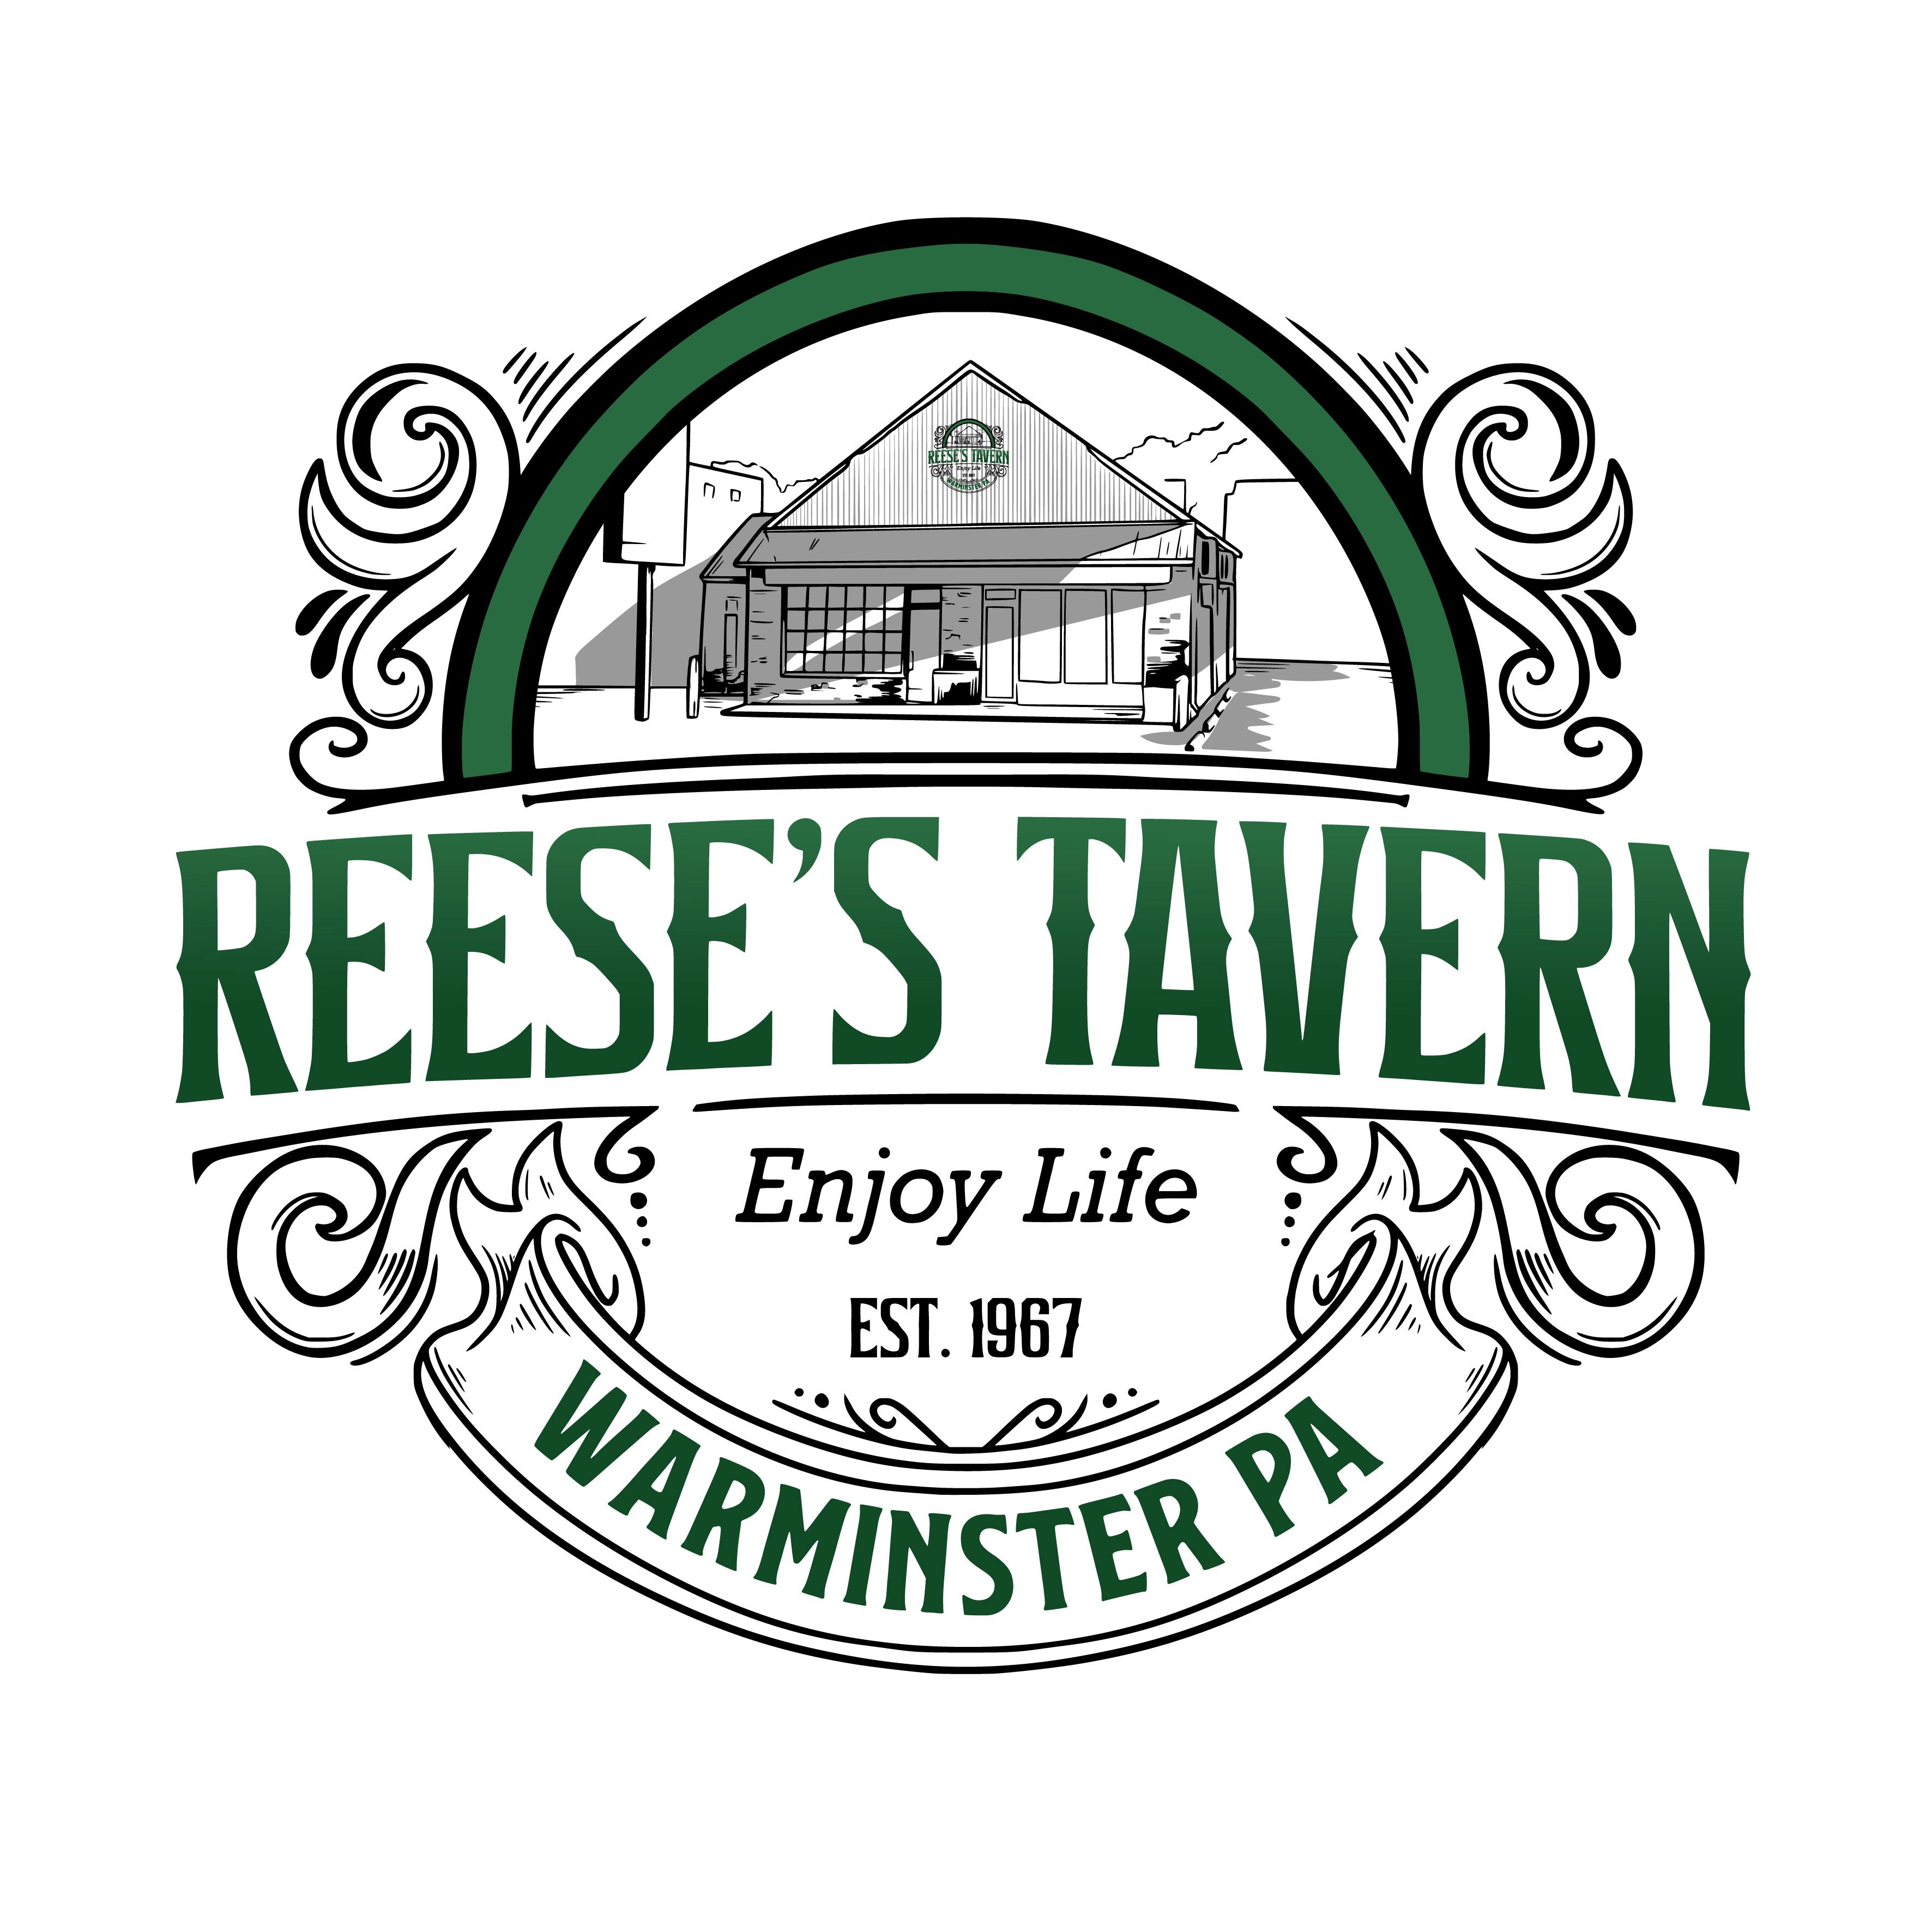 Reese's Tavern